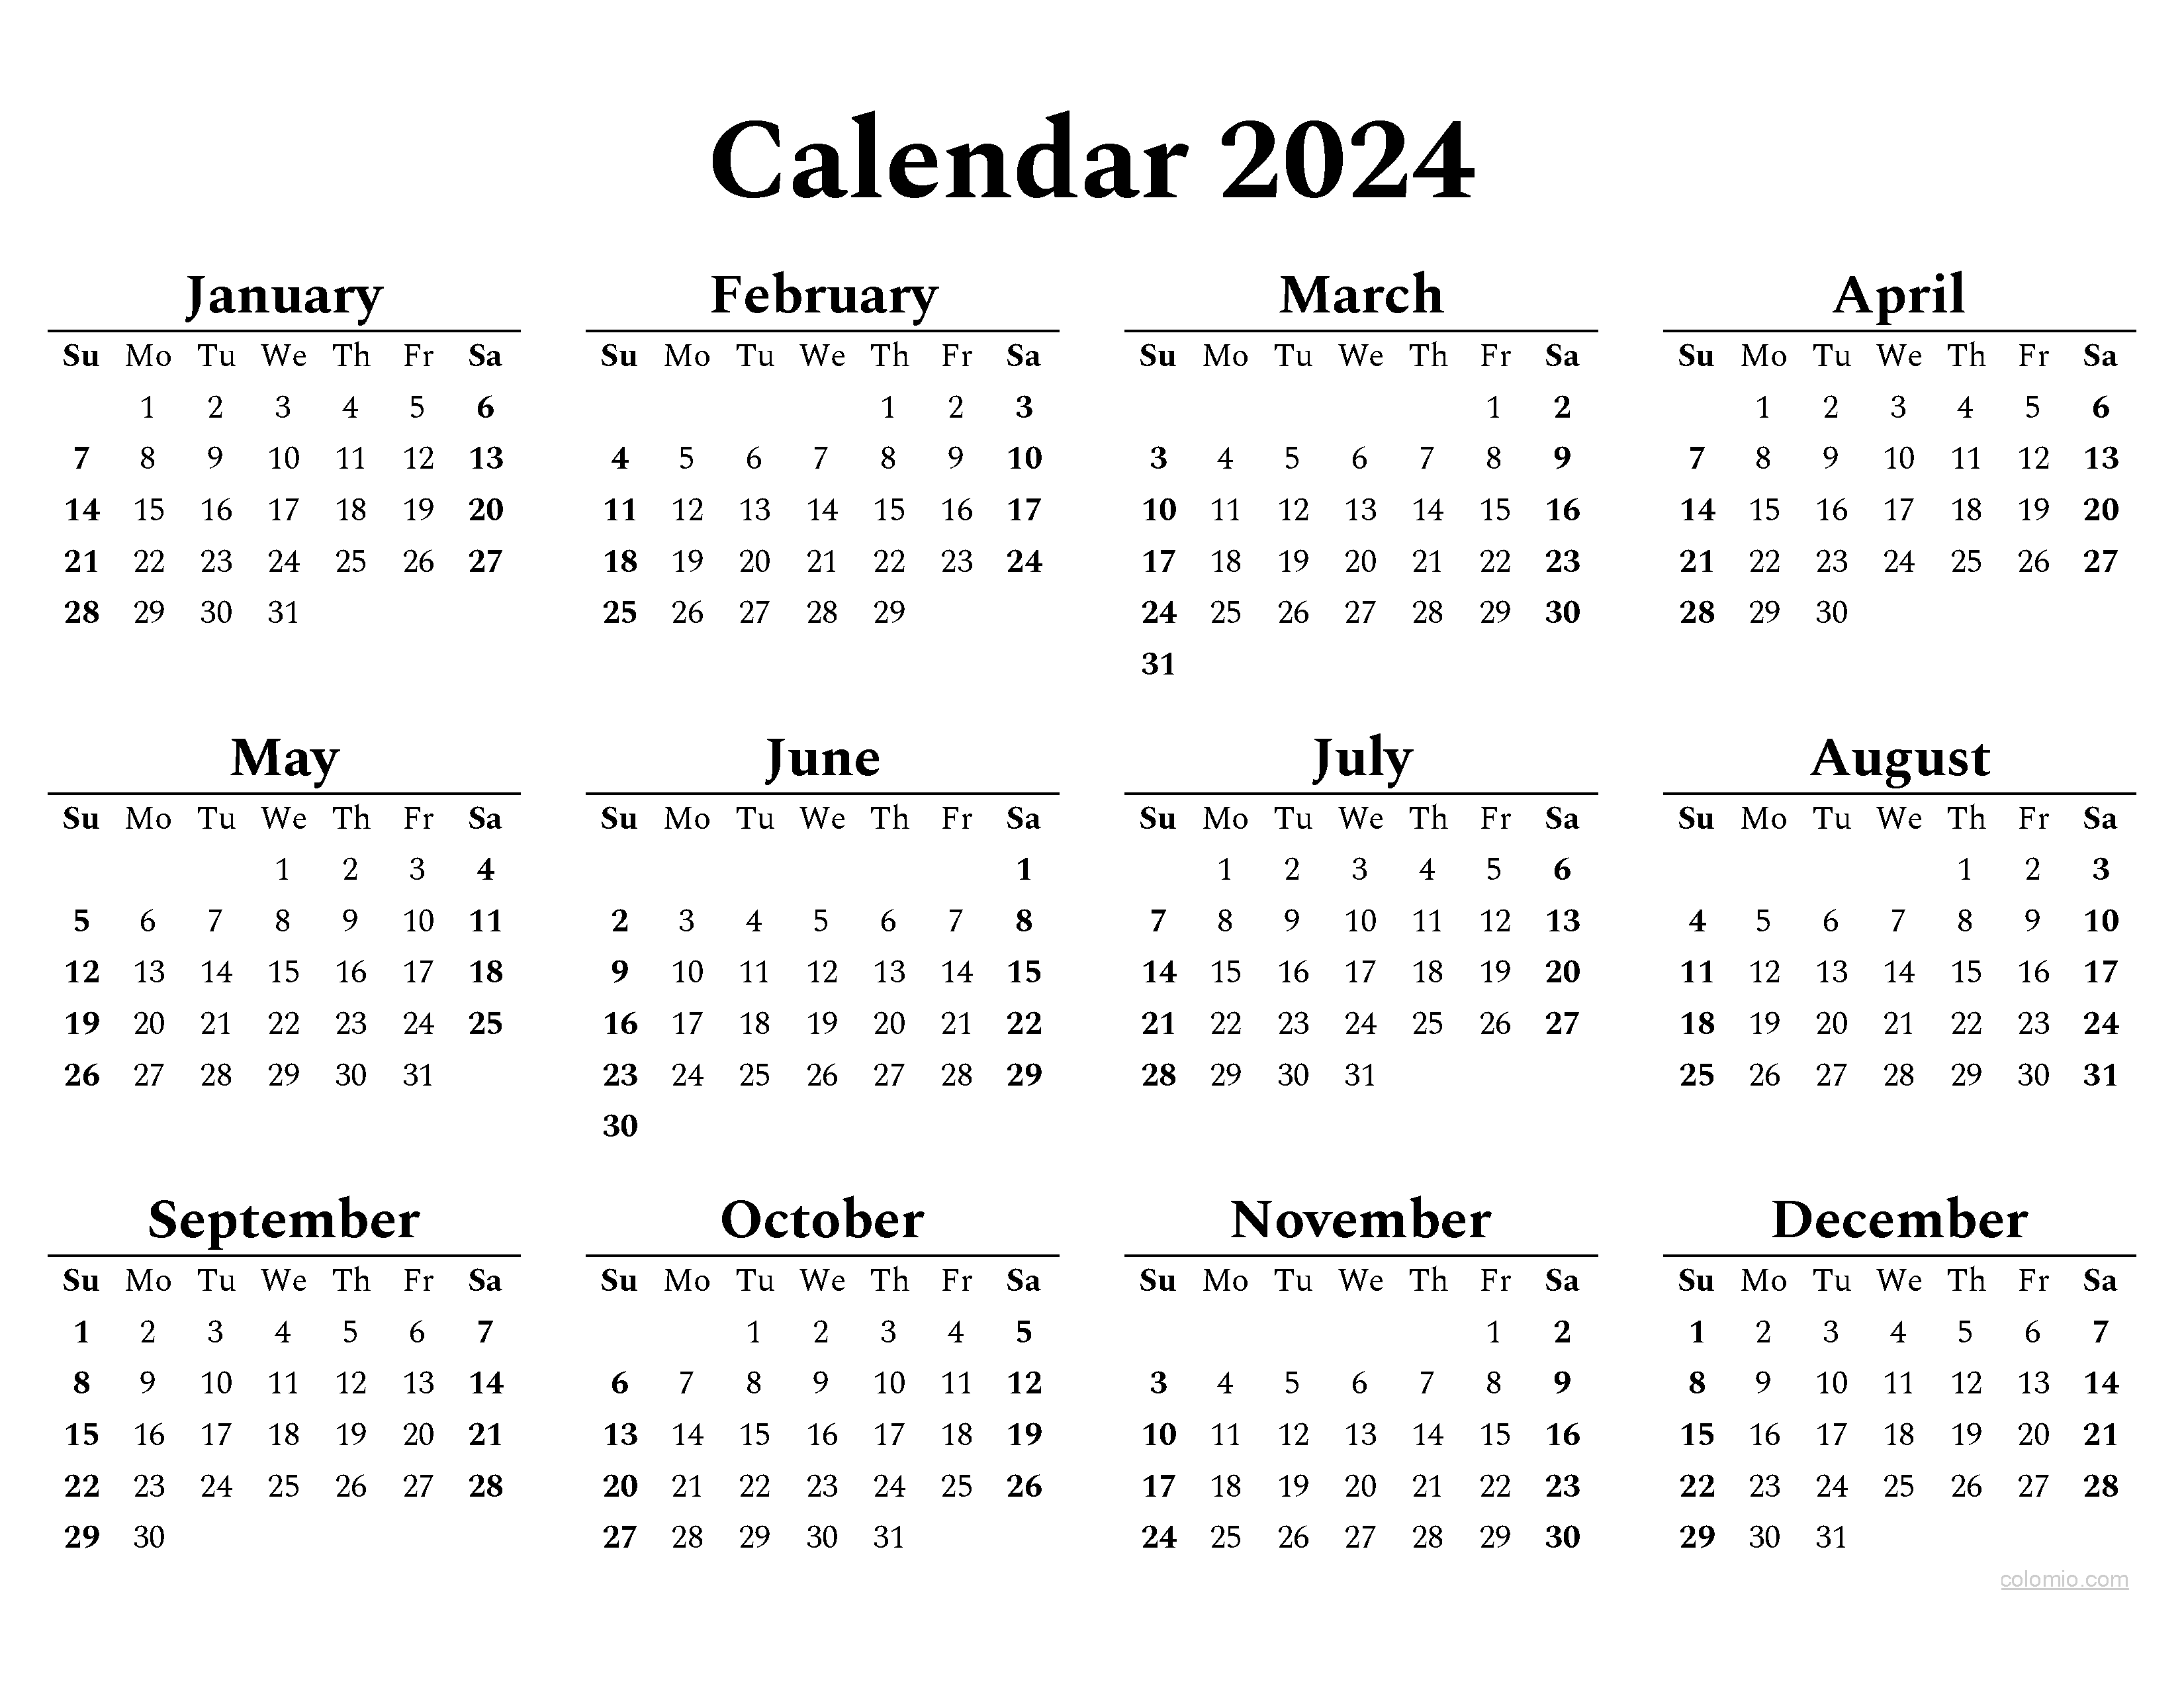 Calendar 2024 Template Pdf Fina Orelle - Free Printable 2-Page Monthly Calendar 2024